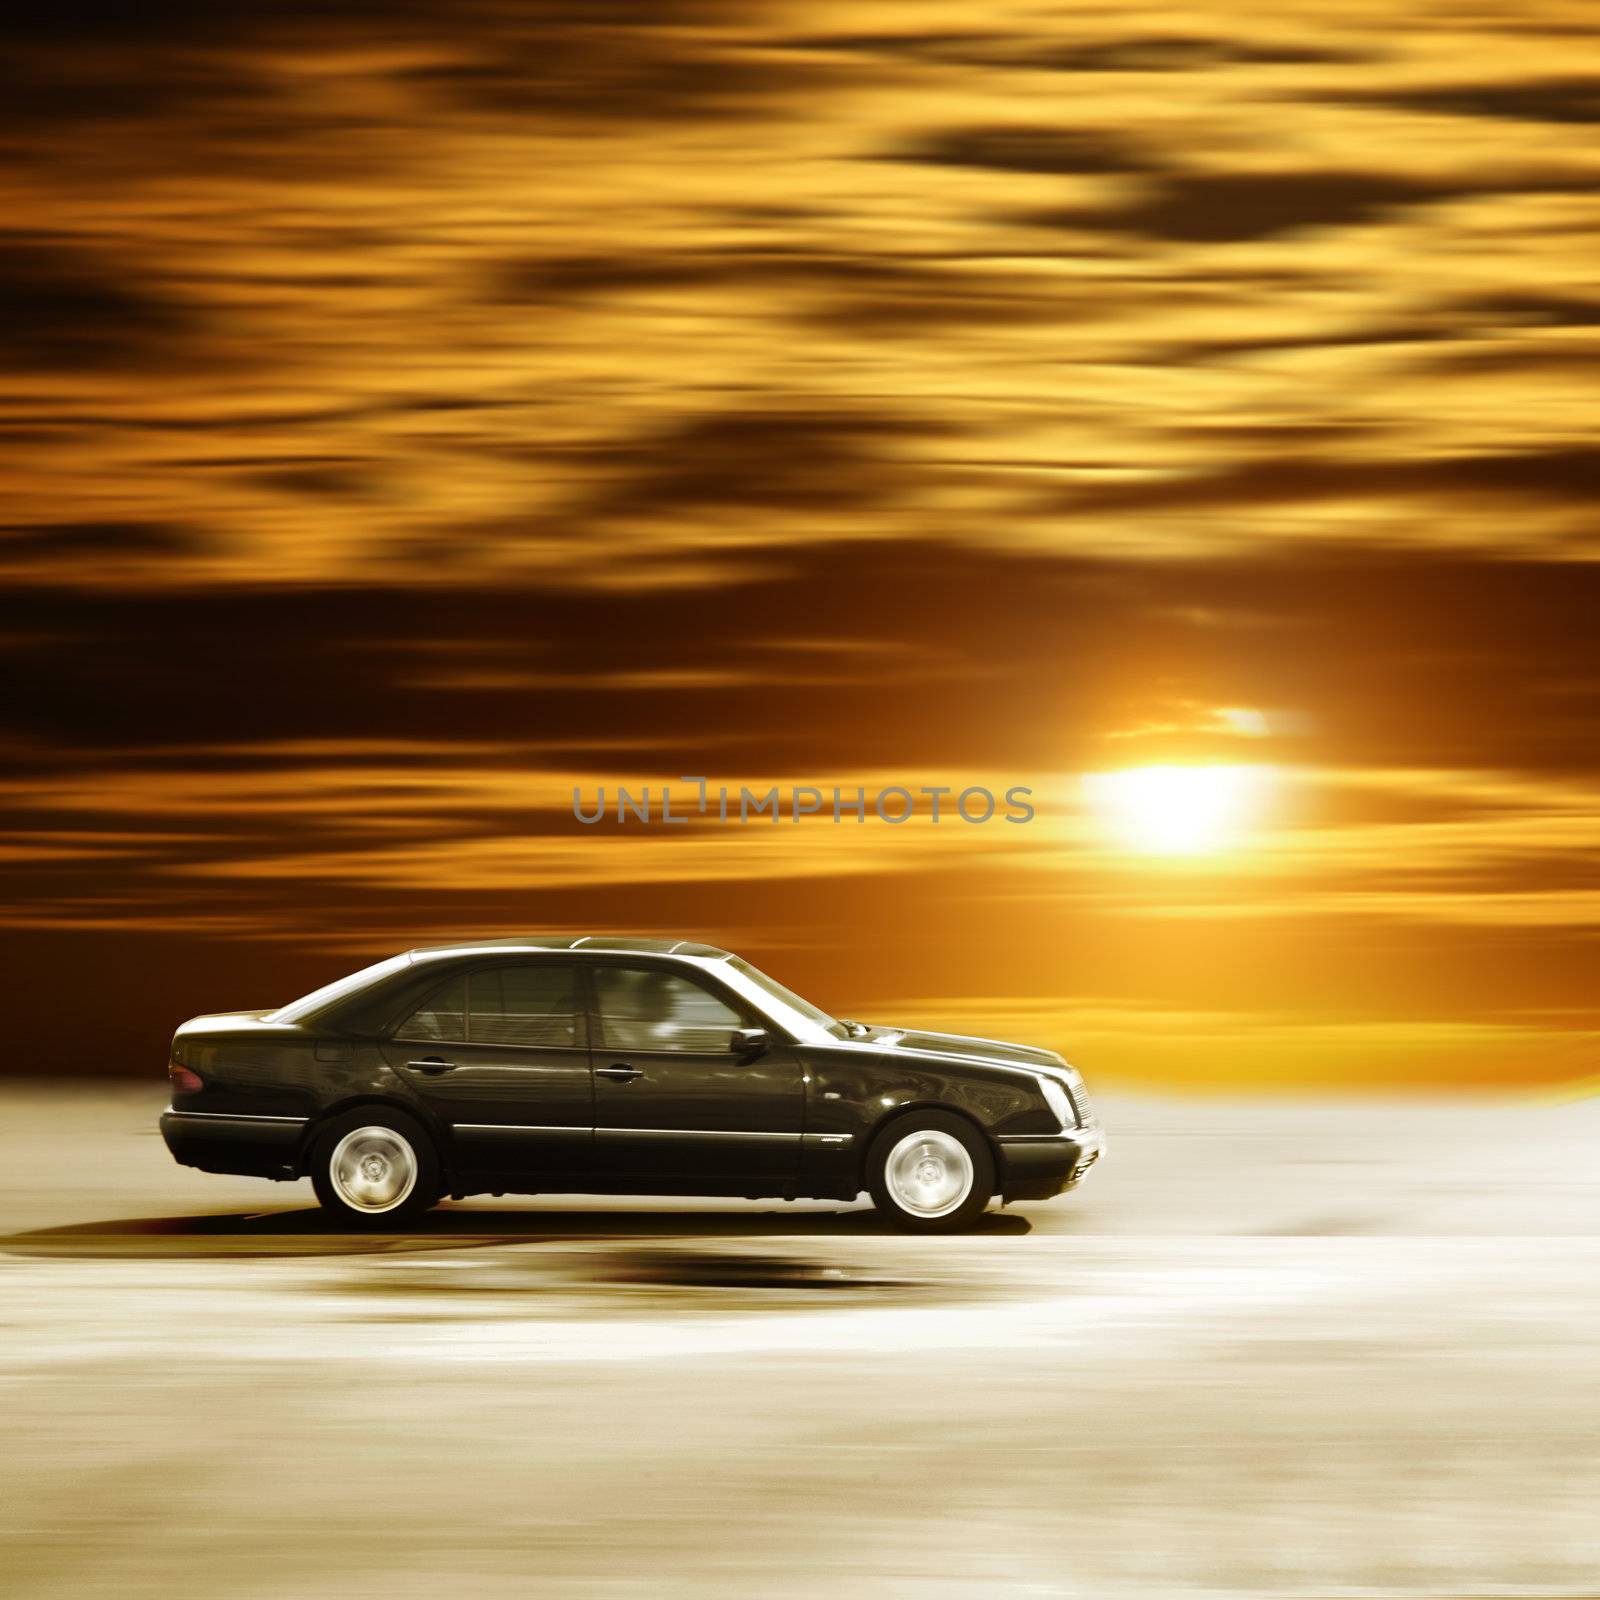 sunrise trip on speed car blurred inmotion